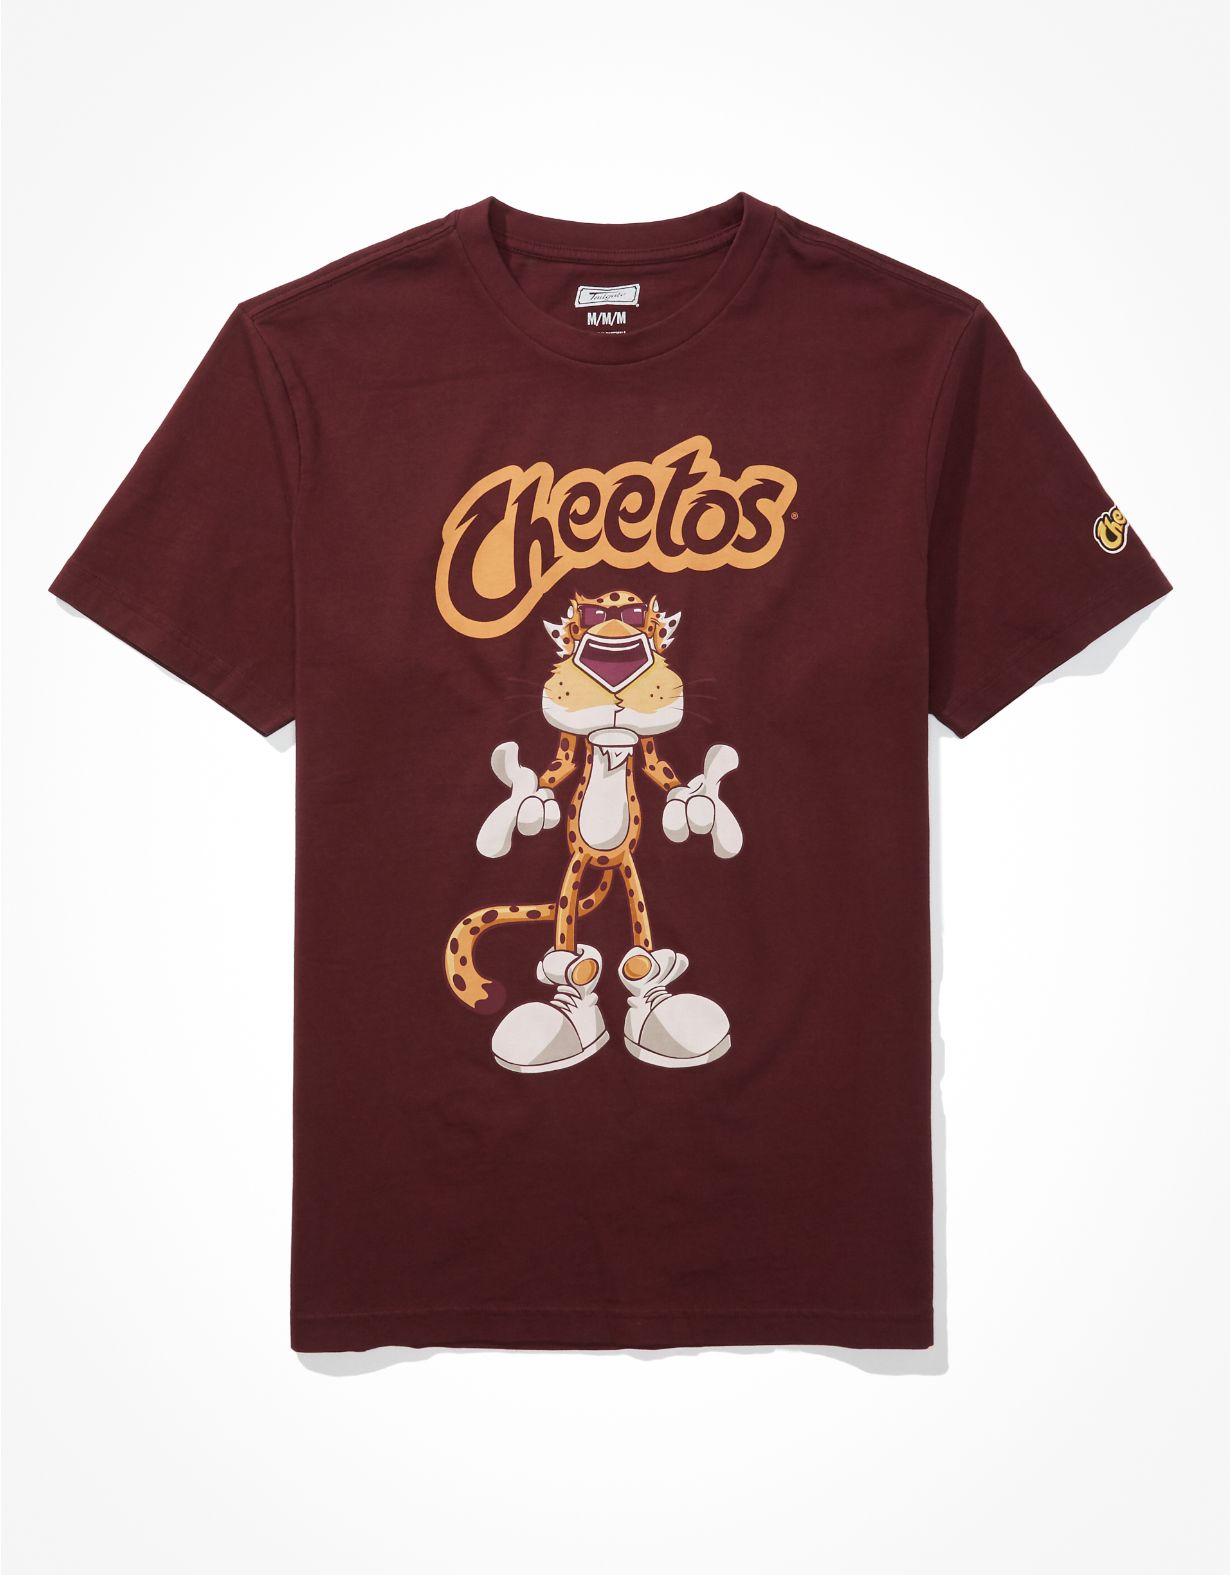 Tailgate Men's Cheetos Graphic T-Shirt